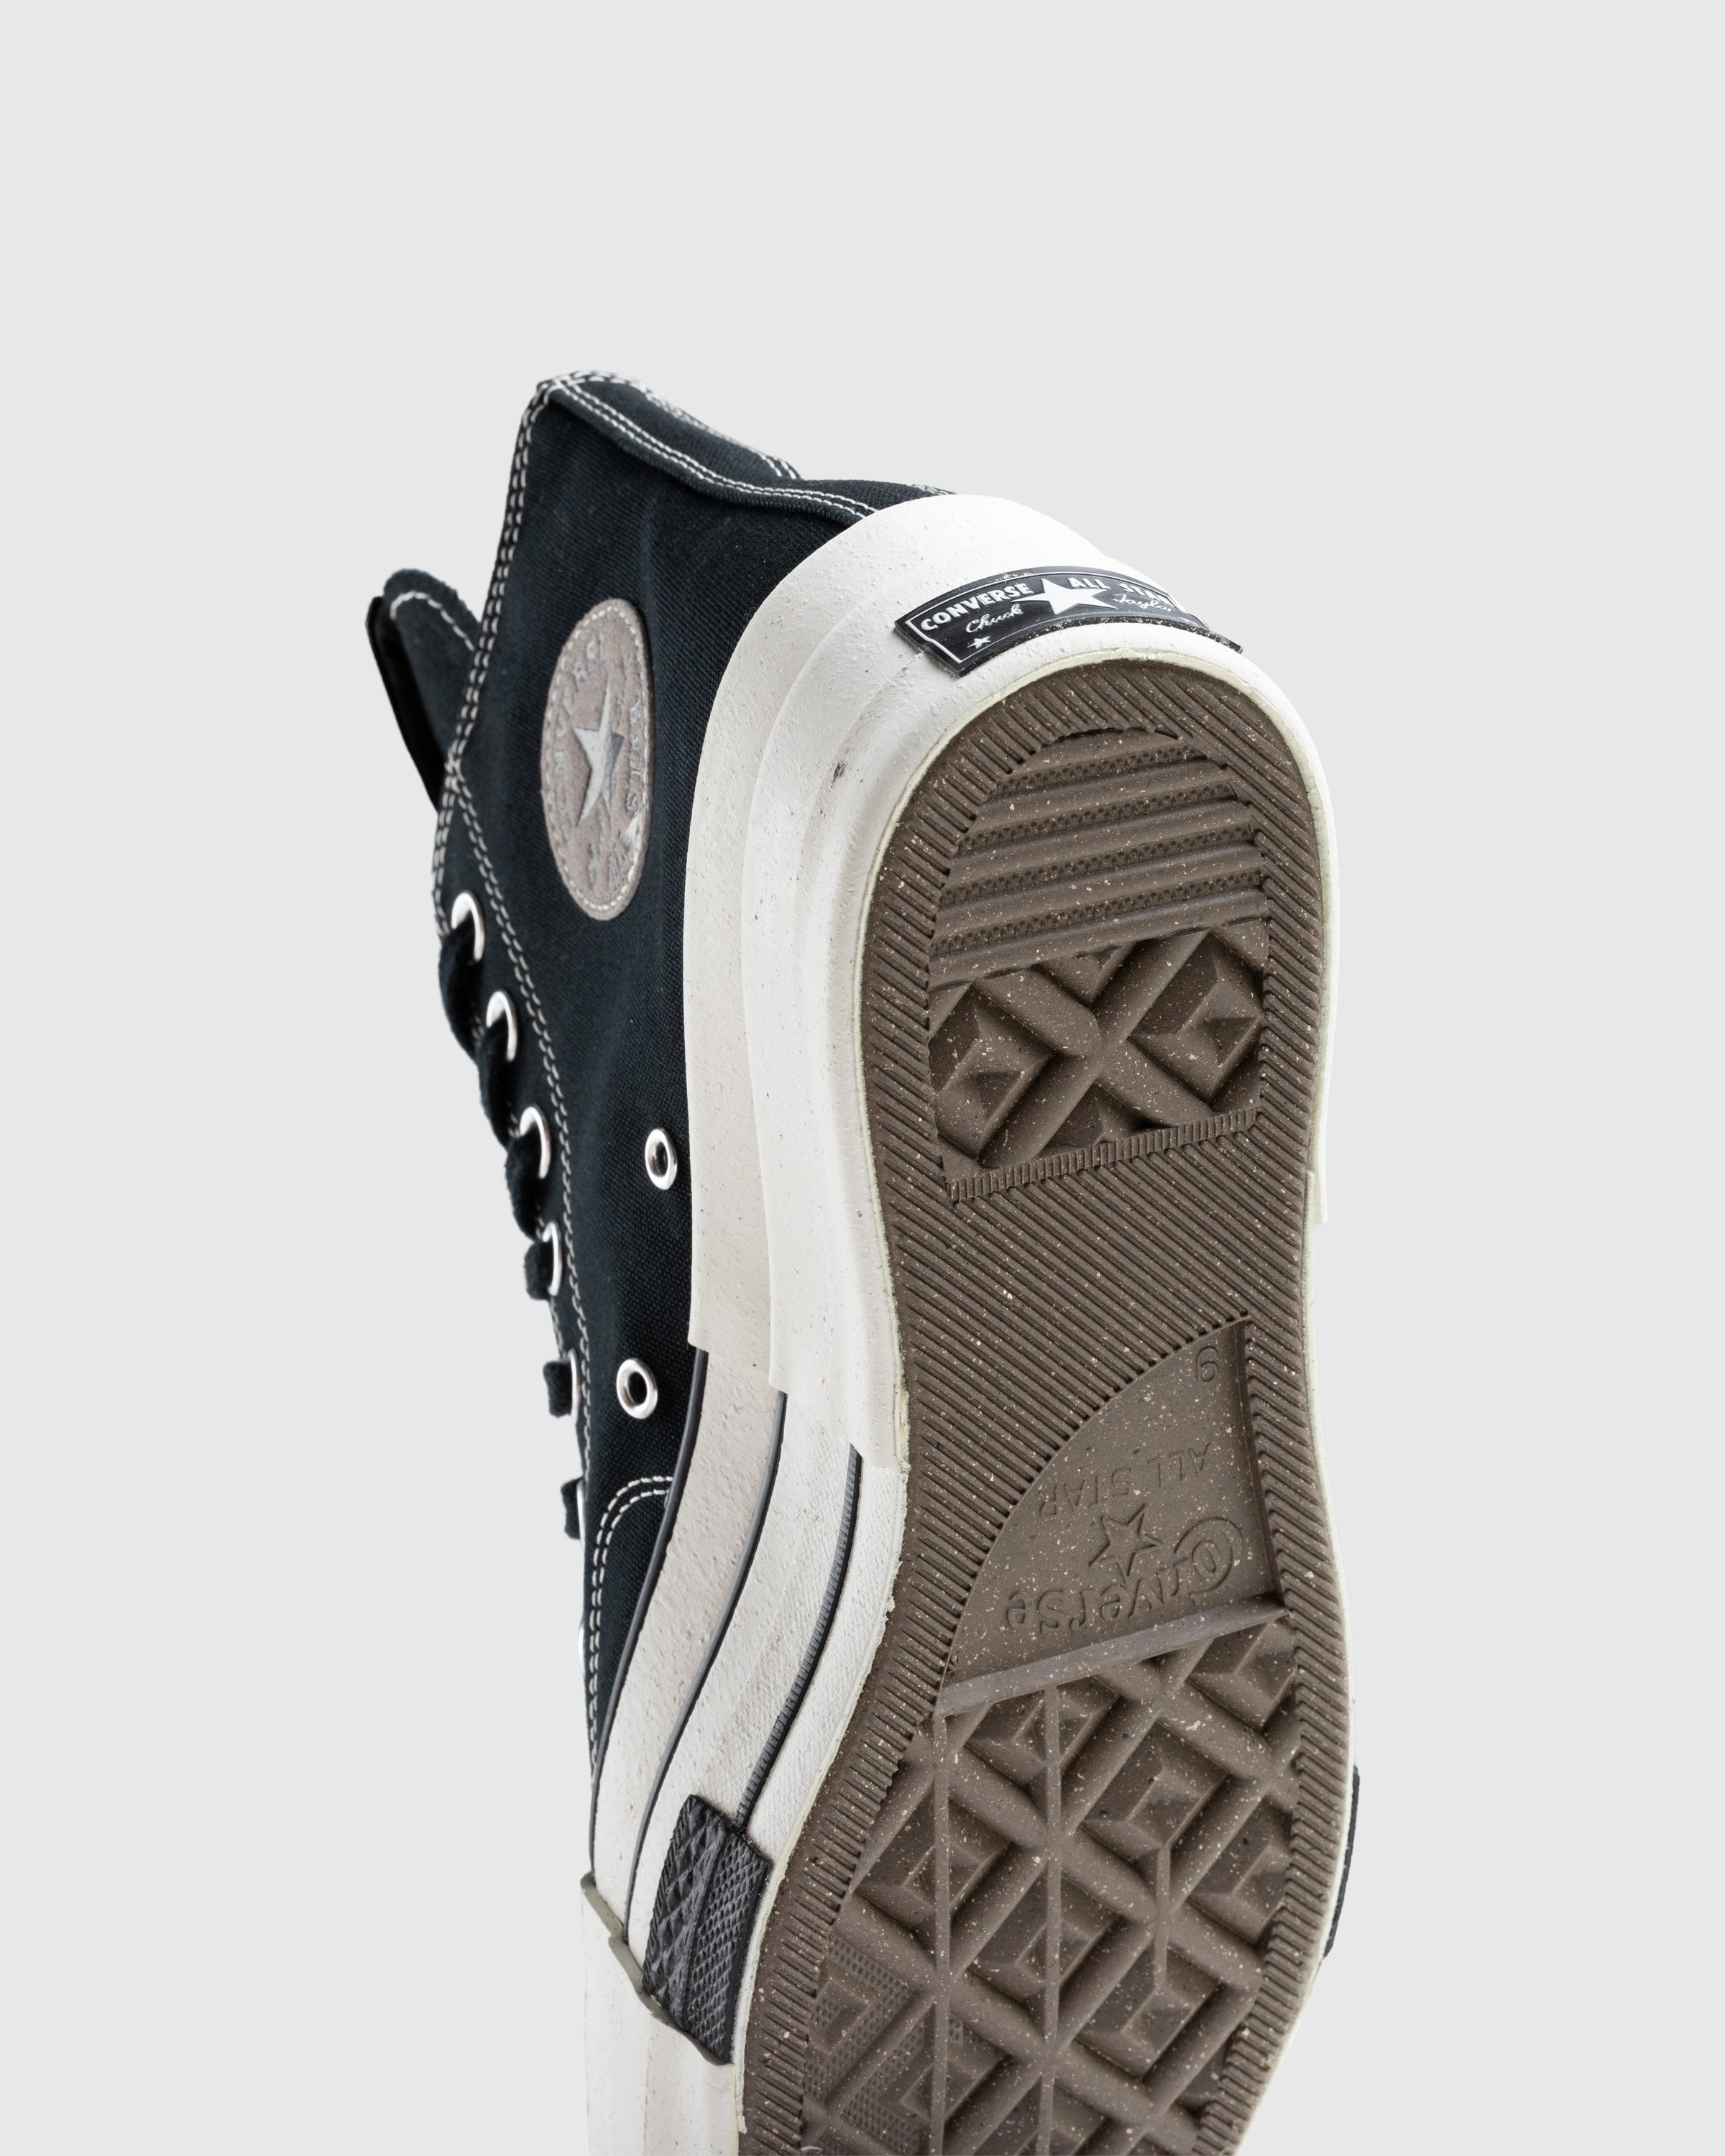 Converse x DRKSHDW - DBL DRKSTAR HI Black/Egret/White - Footwear - Multi - Image 6